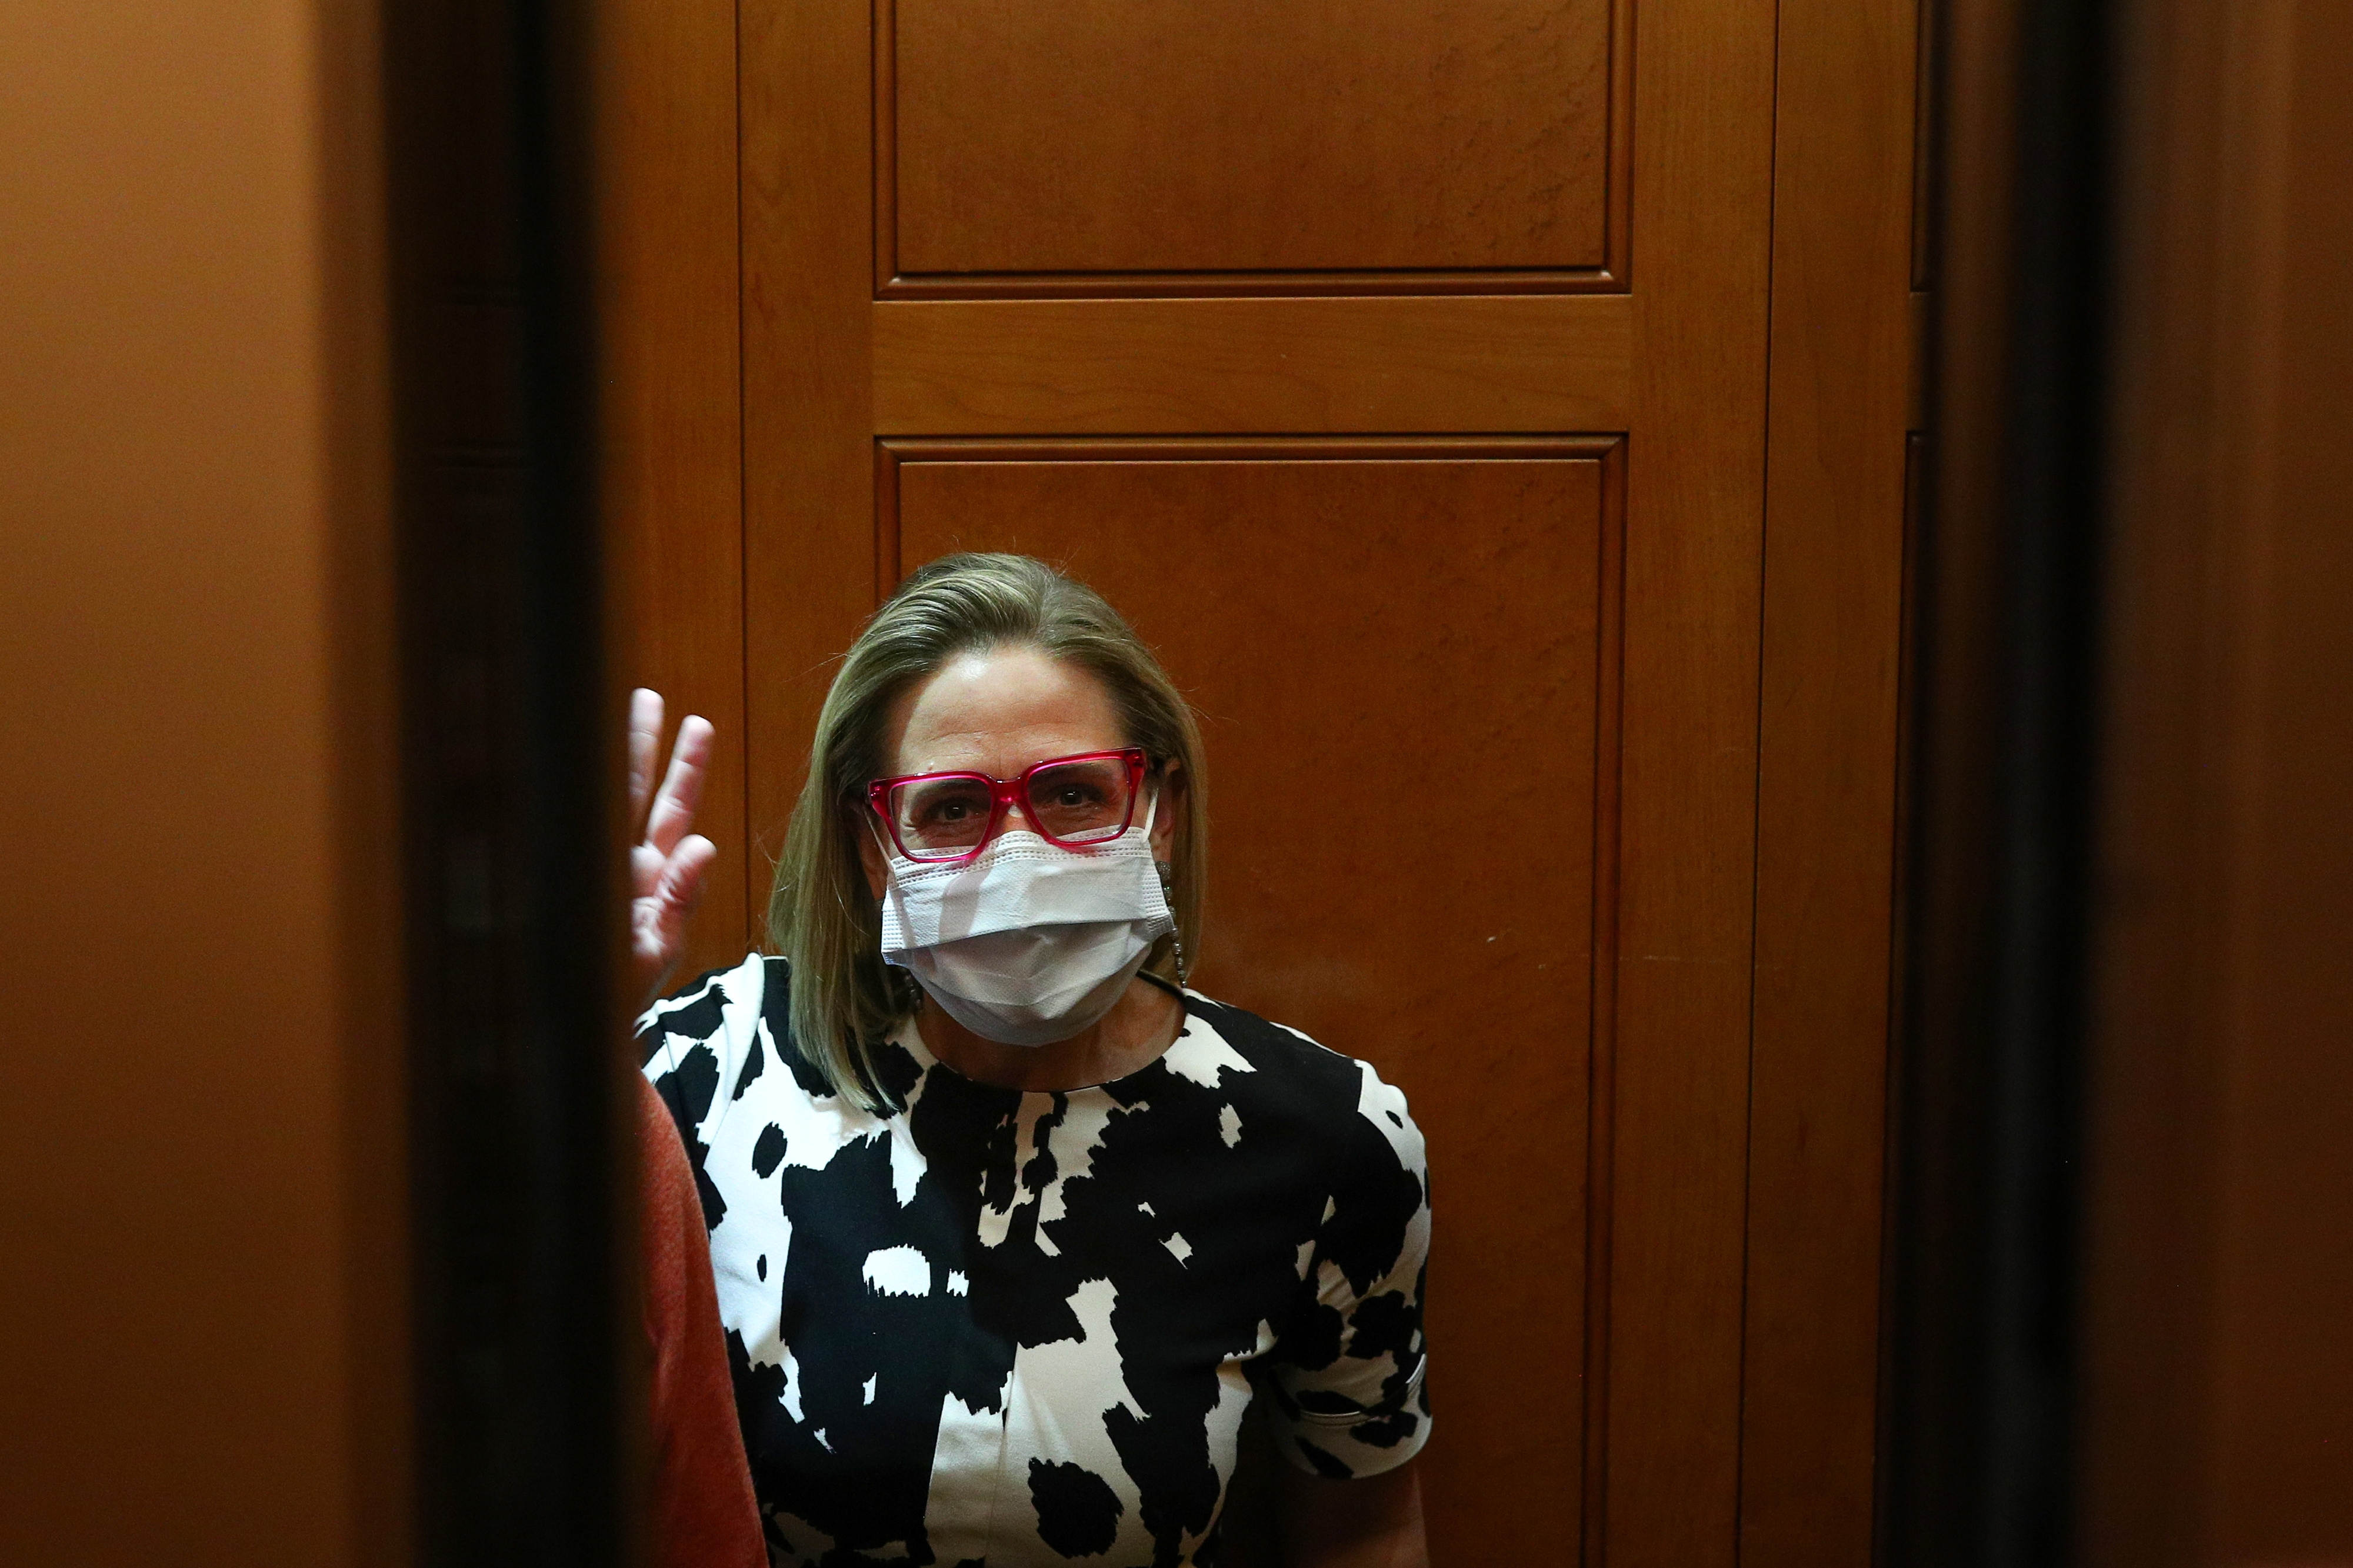 Senator Sinema enters an elevator before walking onto the Senate Floor on Capitol Hill in Washington